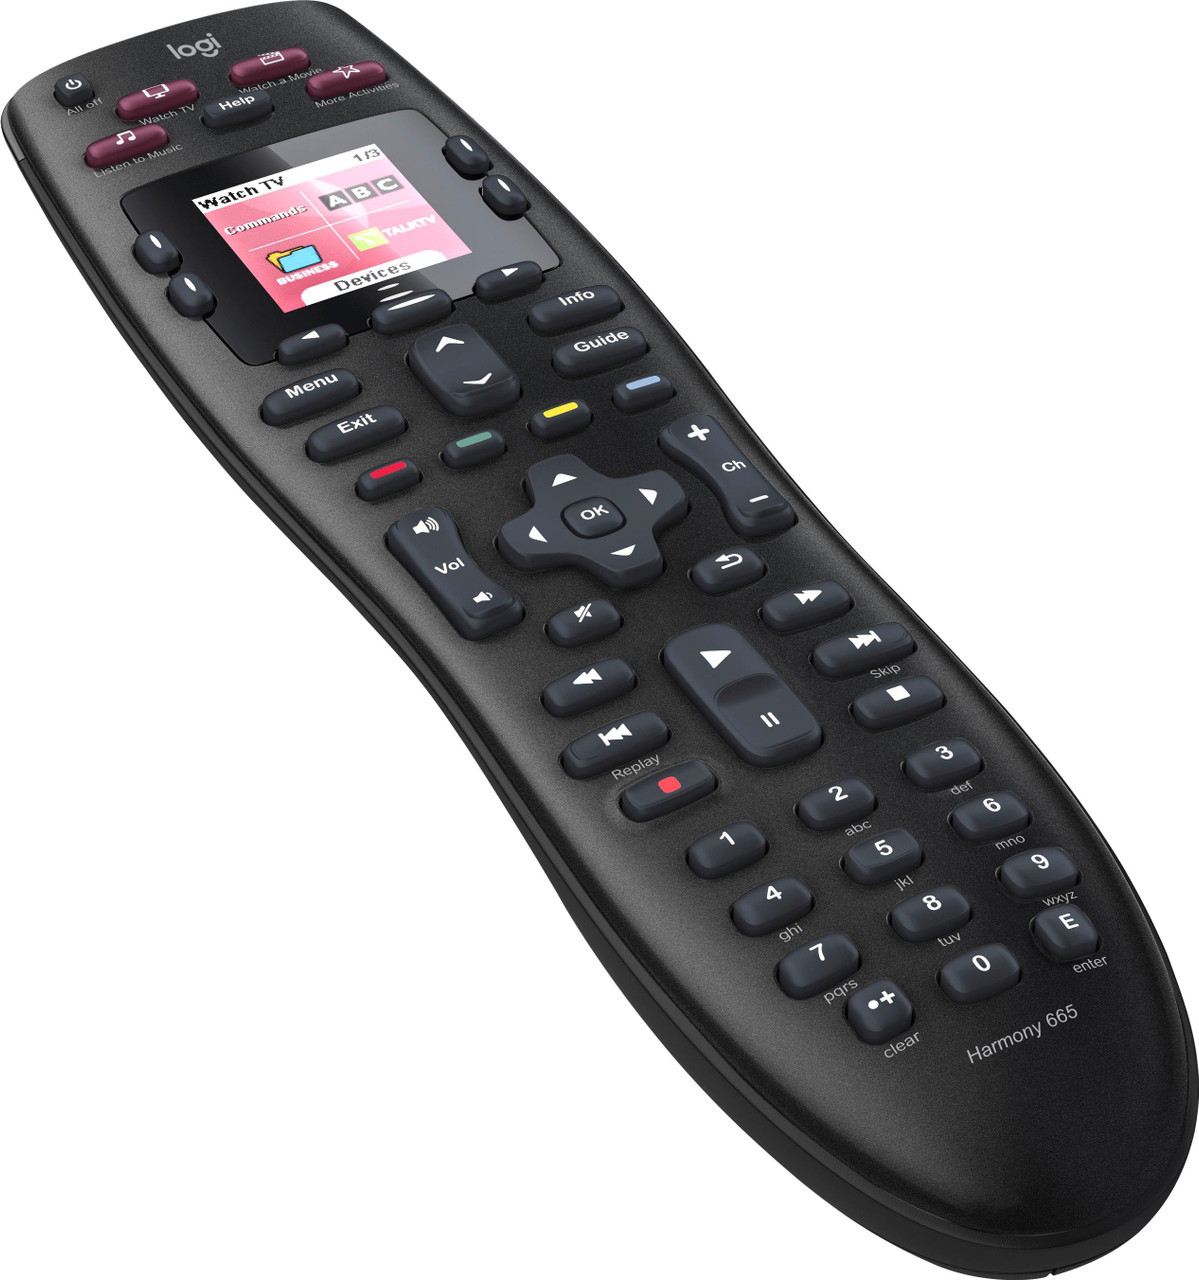 Logitech - Harmony 665 10-Device Universal Remote - Black